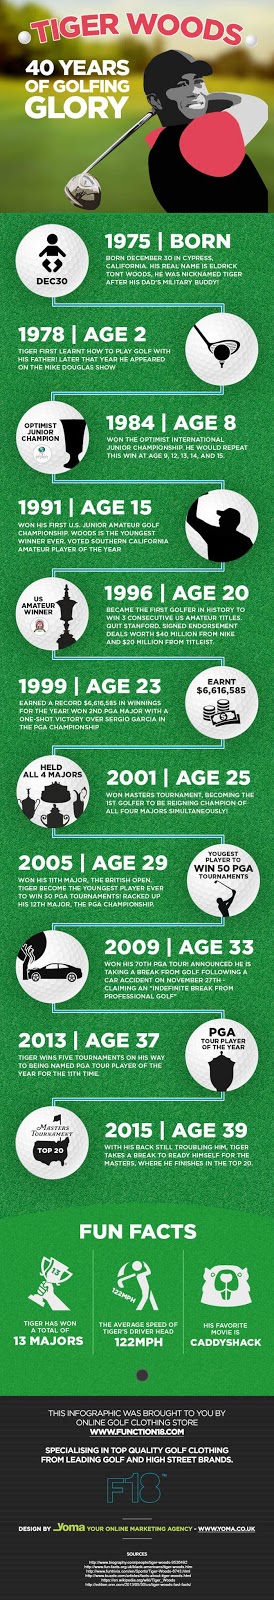 Celebrating 40 Years of Tiger Woods - Visulattic - Your Infographics ...